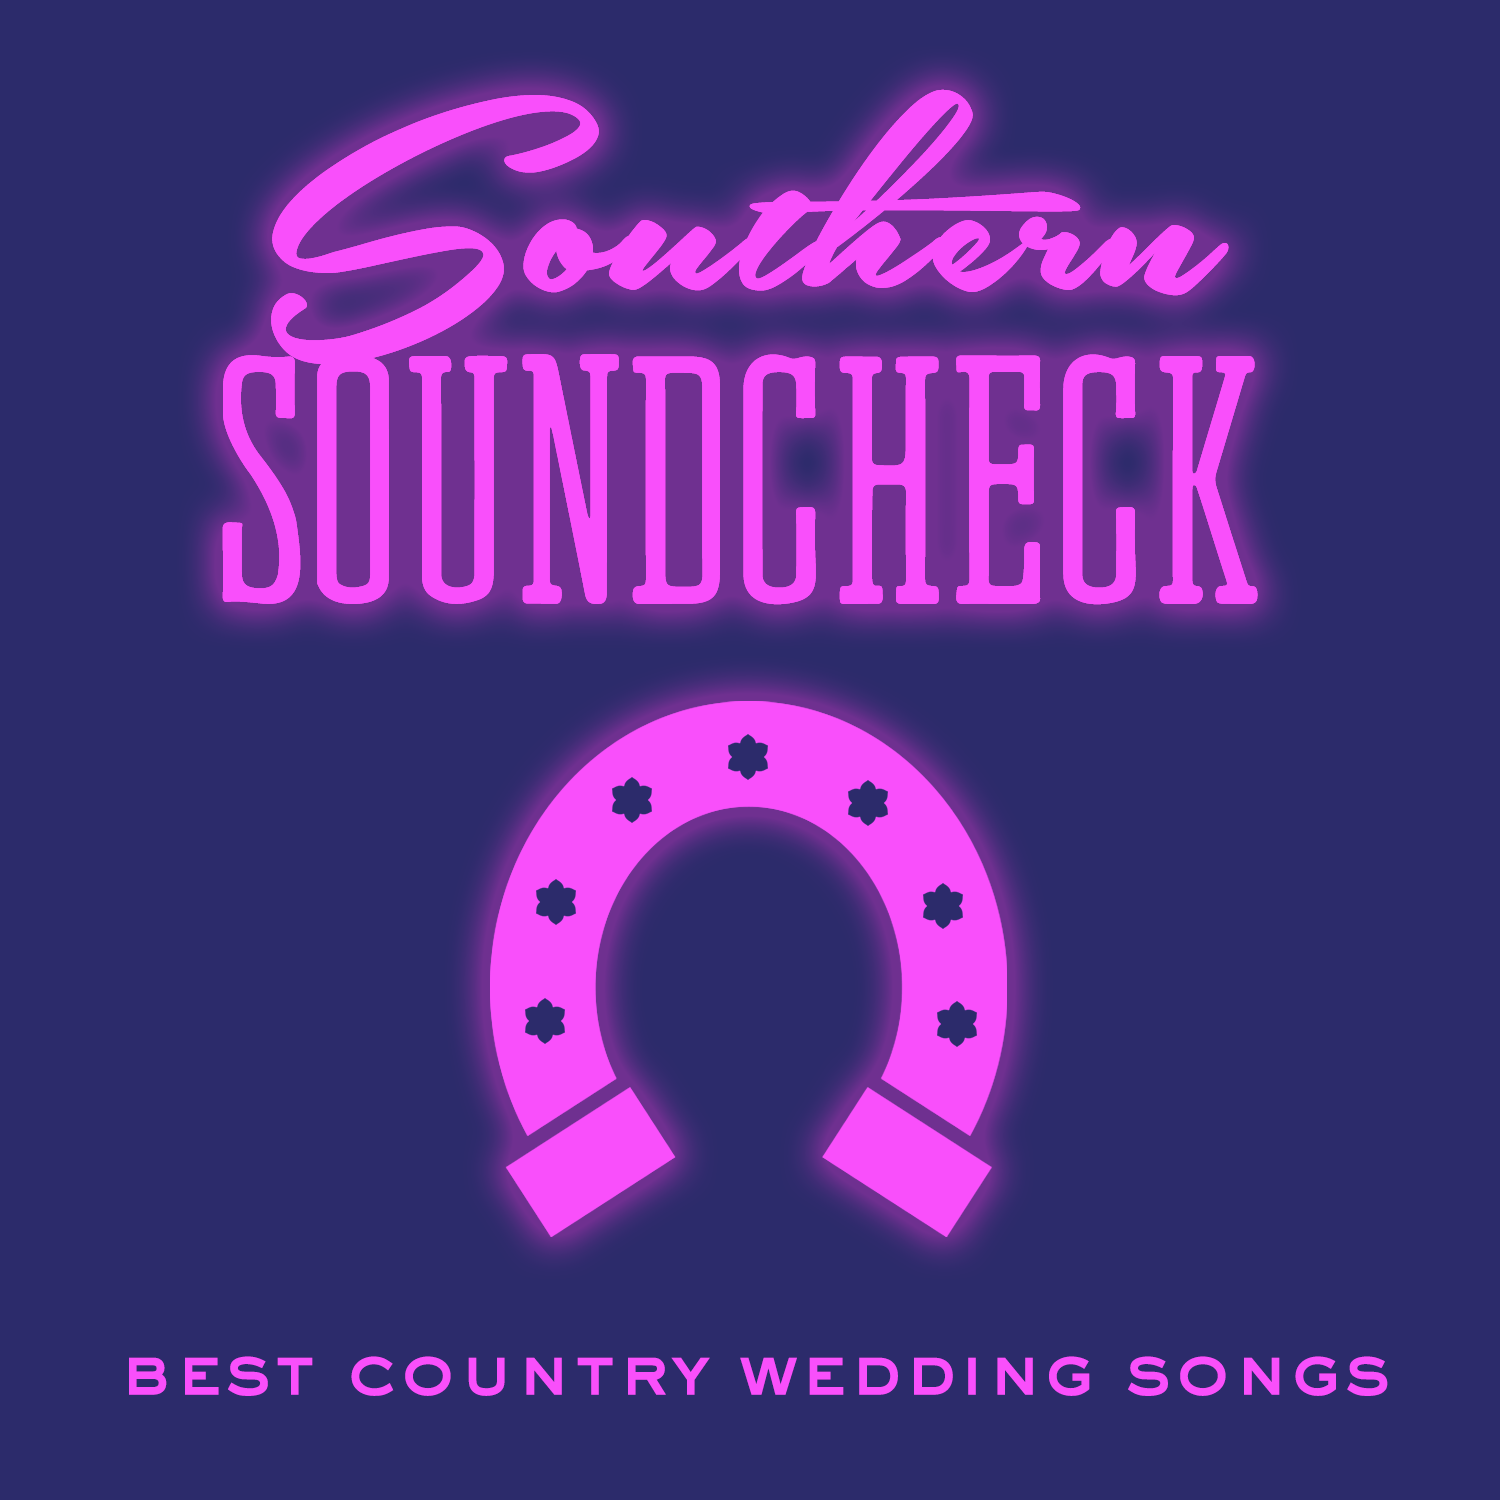 Best country wedding songs